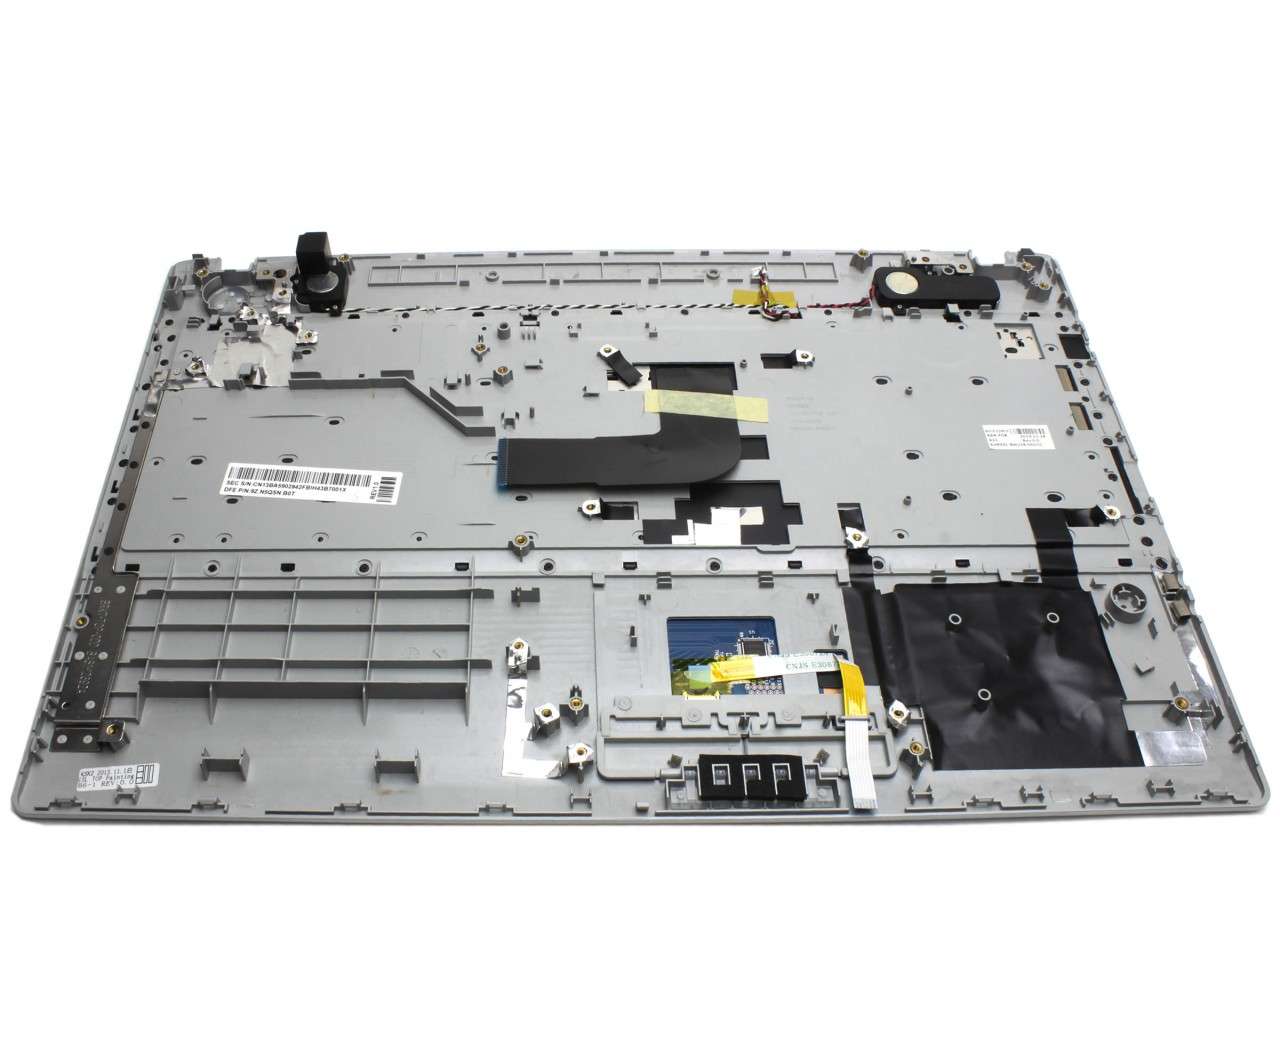 Tastatura Samsung NP RV511 neagra cu Palmrest argintiu imagine 2021 powerlaptop.ro